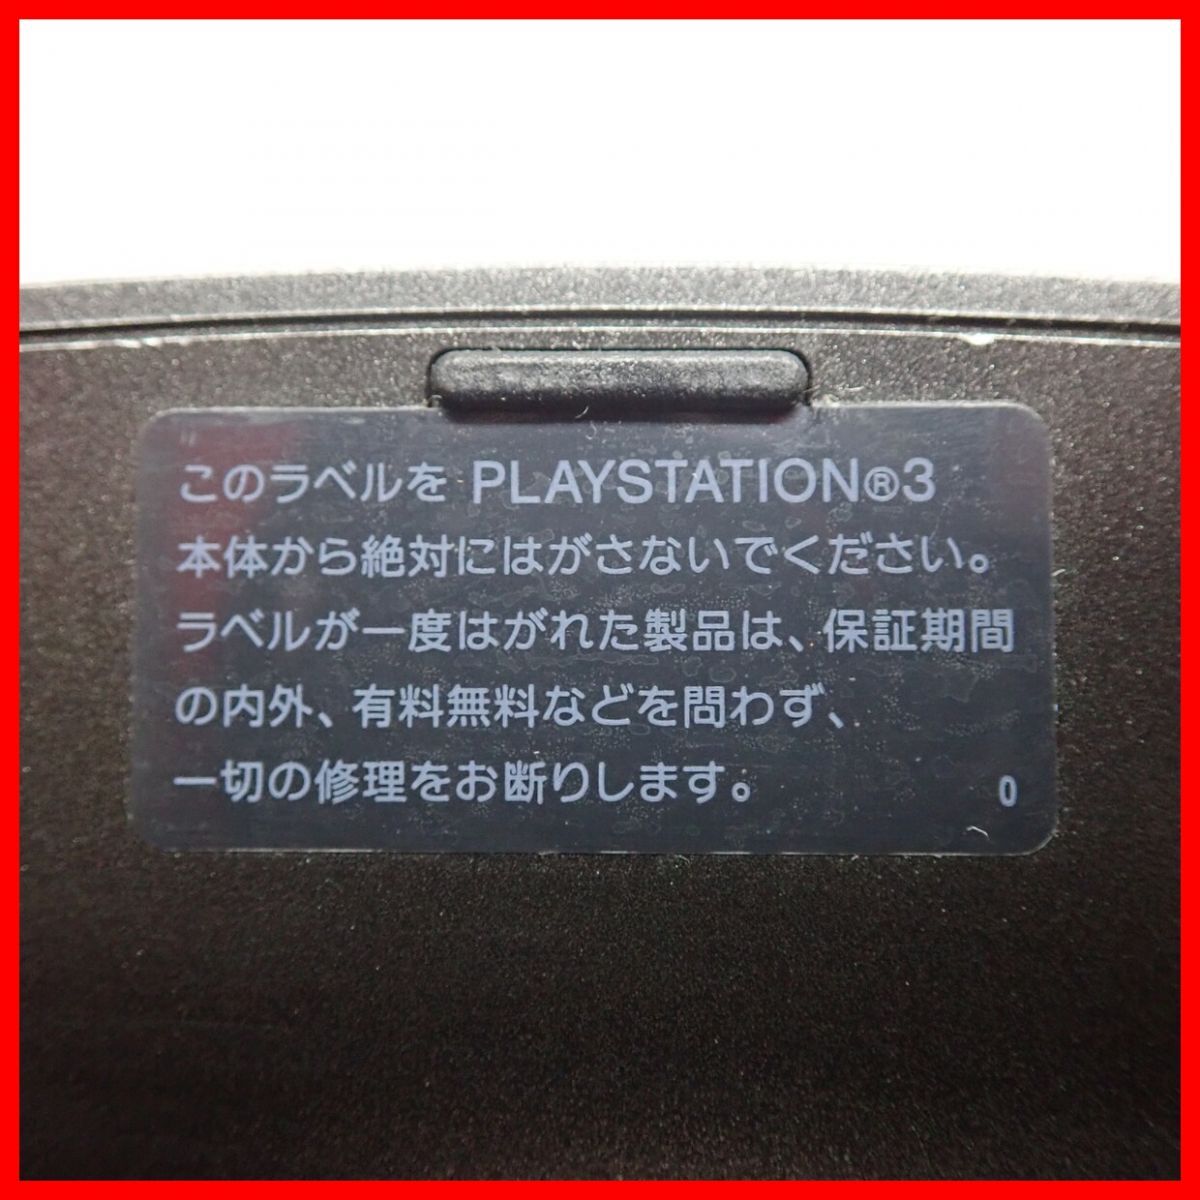 PS3 PlayStation 3 корпус CECHQ00 AC FINAL FANTASY VII ADVENT CHILDREN COMPLETE CLOUD BLACK + XIII Trial Version Set коробка мнение есть Junk [20